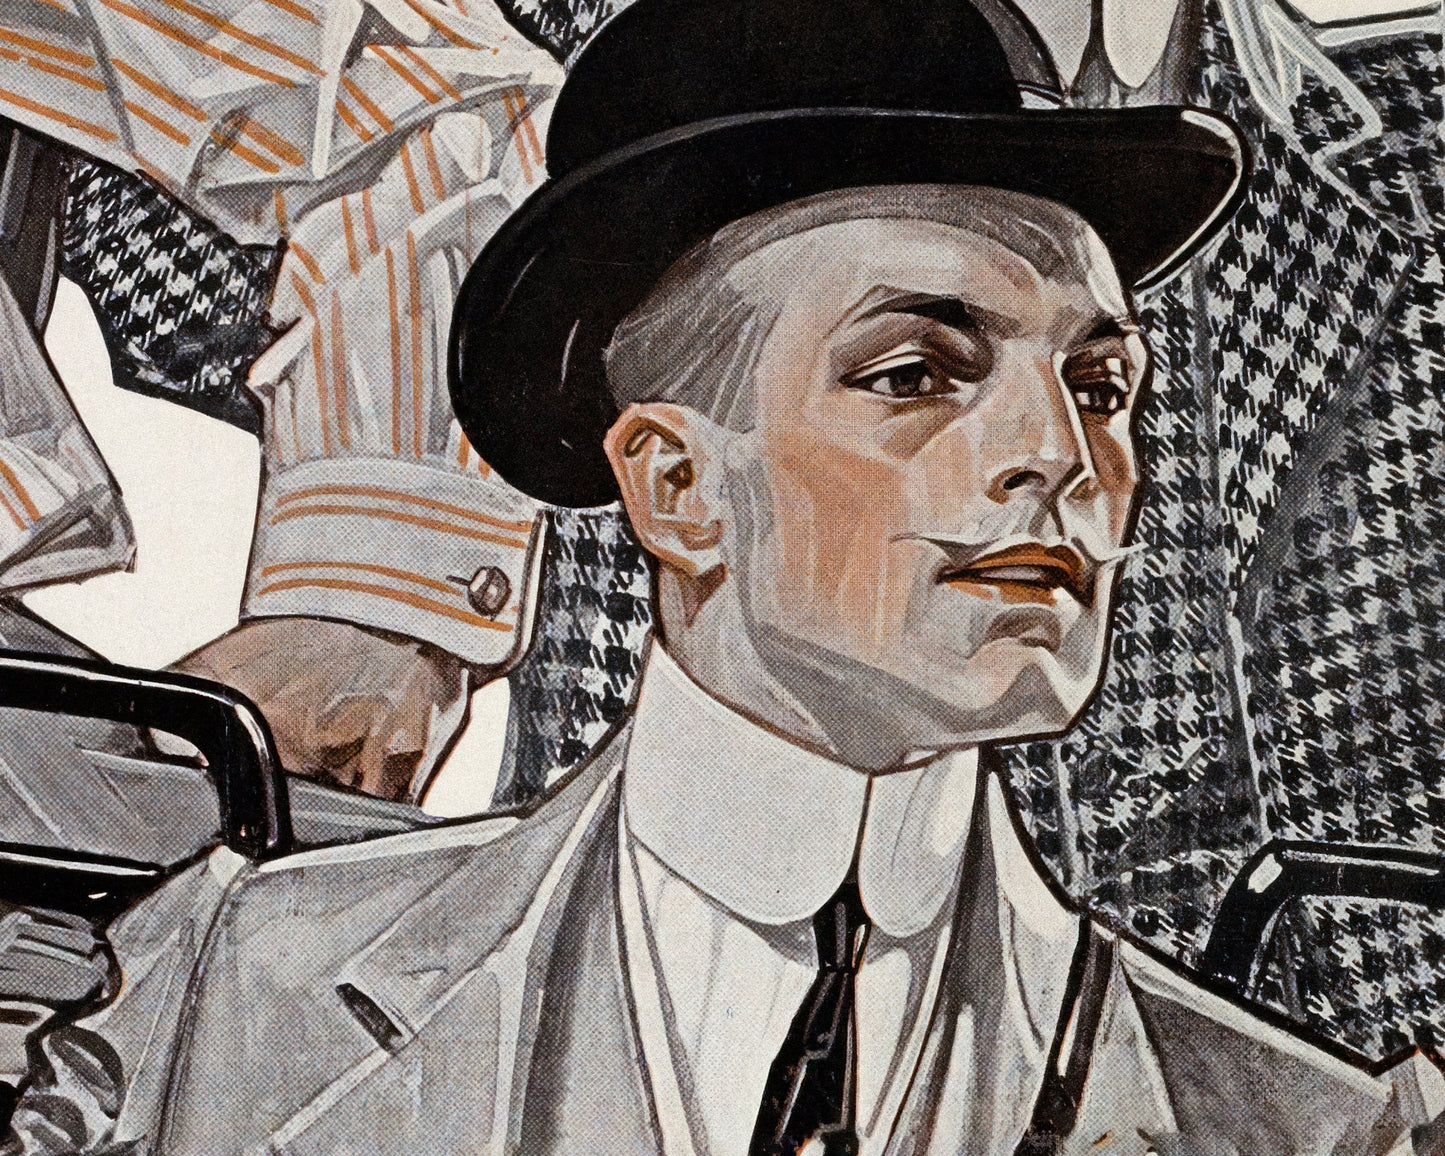 J.C Leyendecker "Arrow collars" (1910) - Mabon Gallery